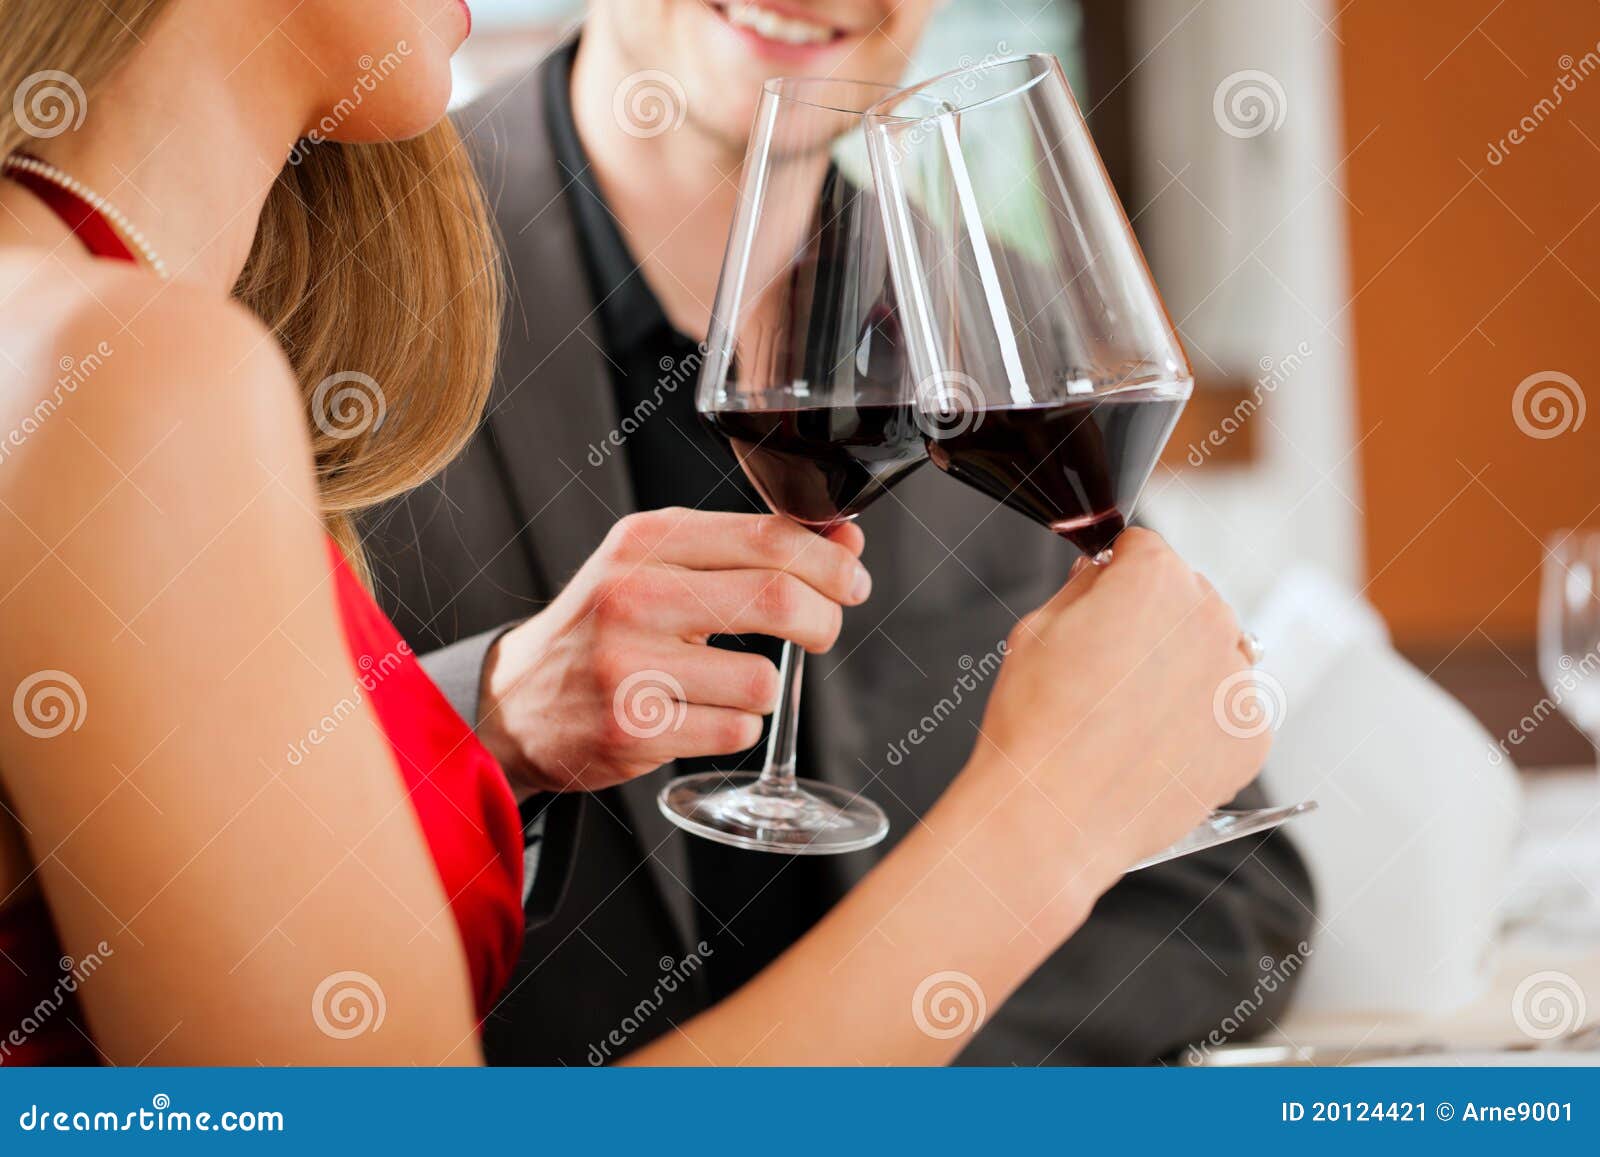 winetasting in restaurant